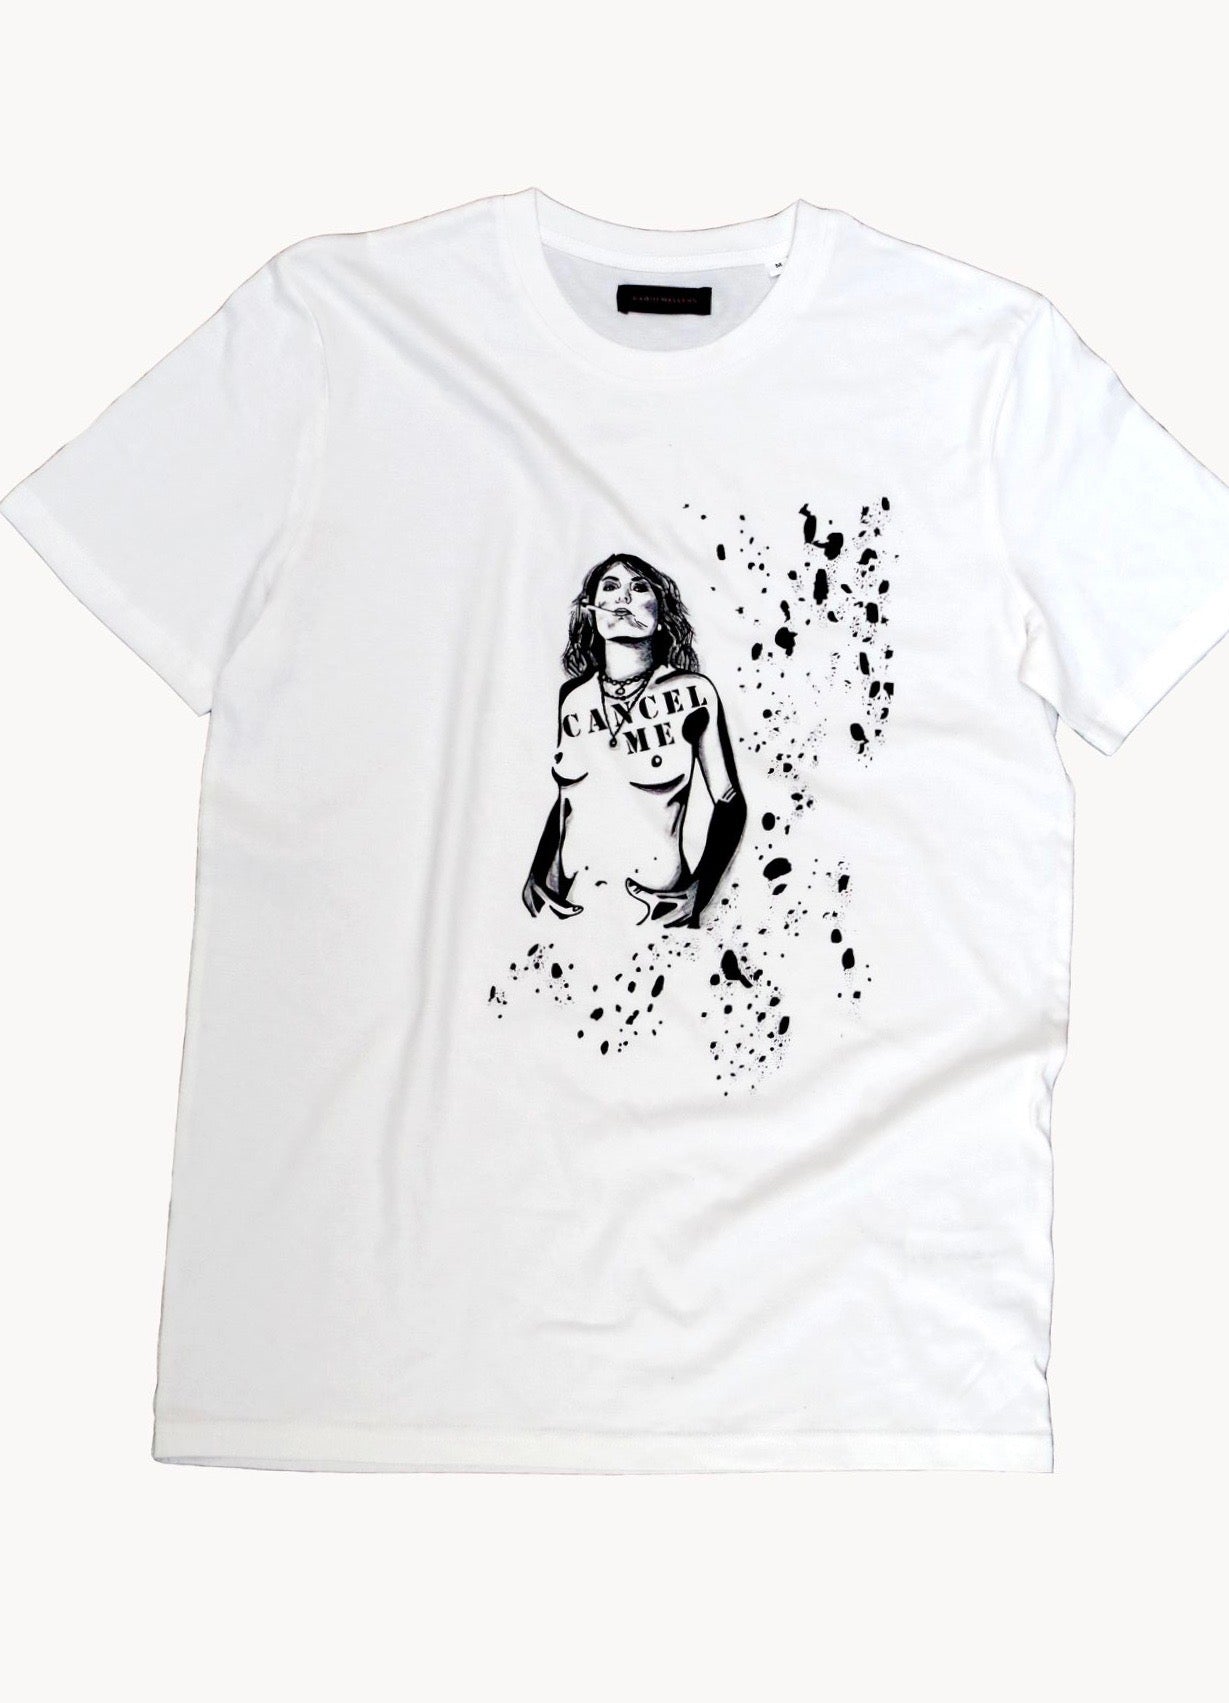 Naomi Wallens - Cancel Me T-Shirt (Saatchi Limited Edition)